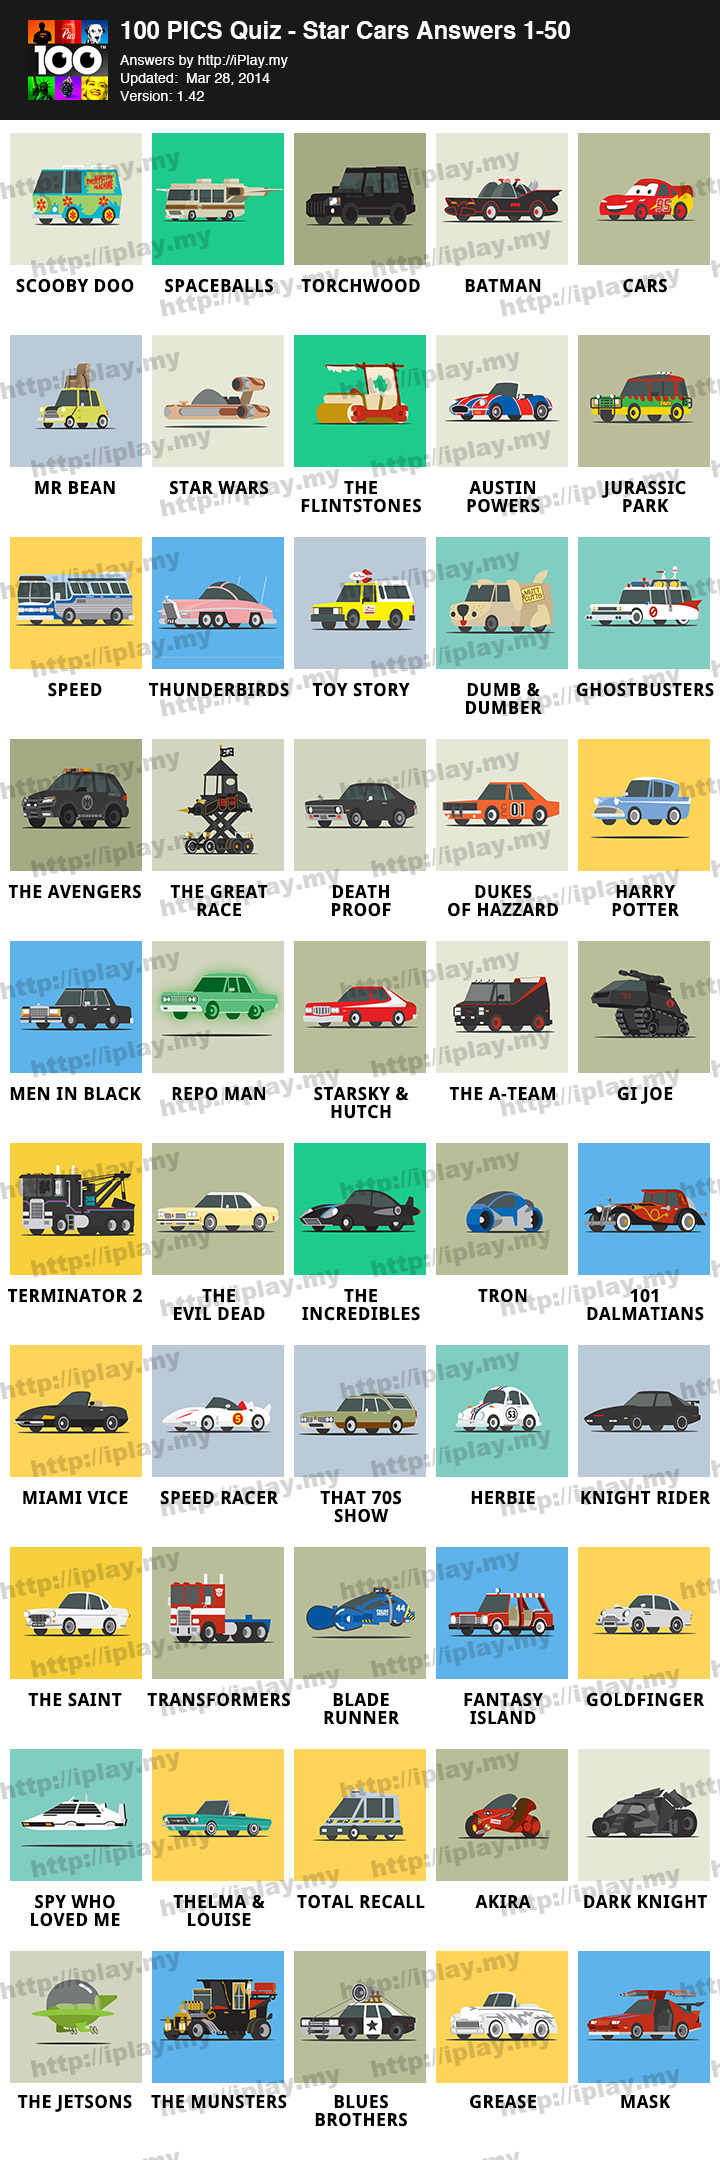 100-Pics-Quiz-Star-Cars-Answers-1-50